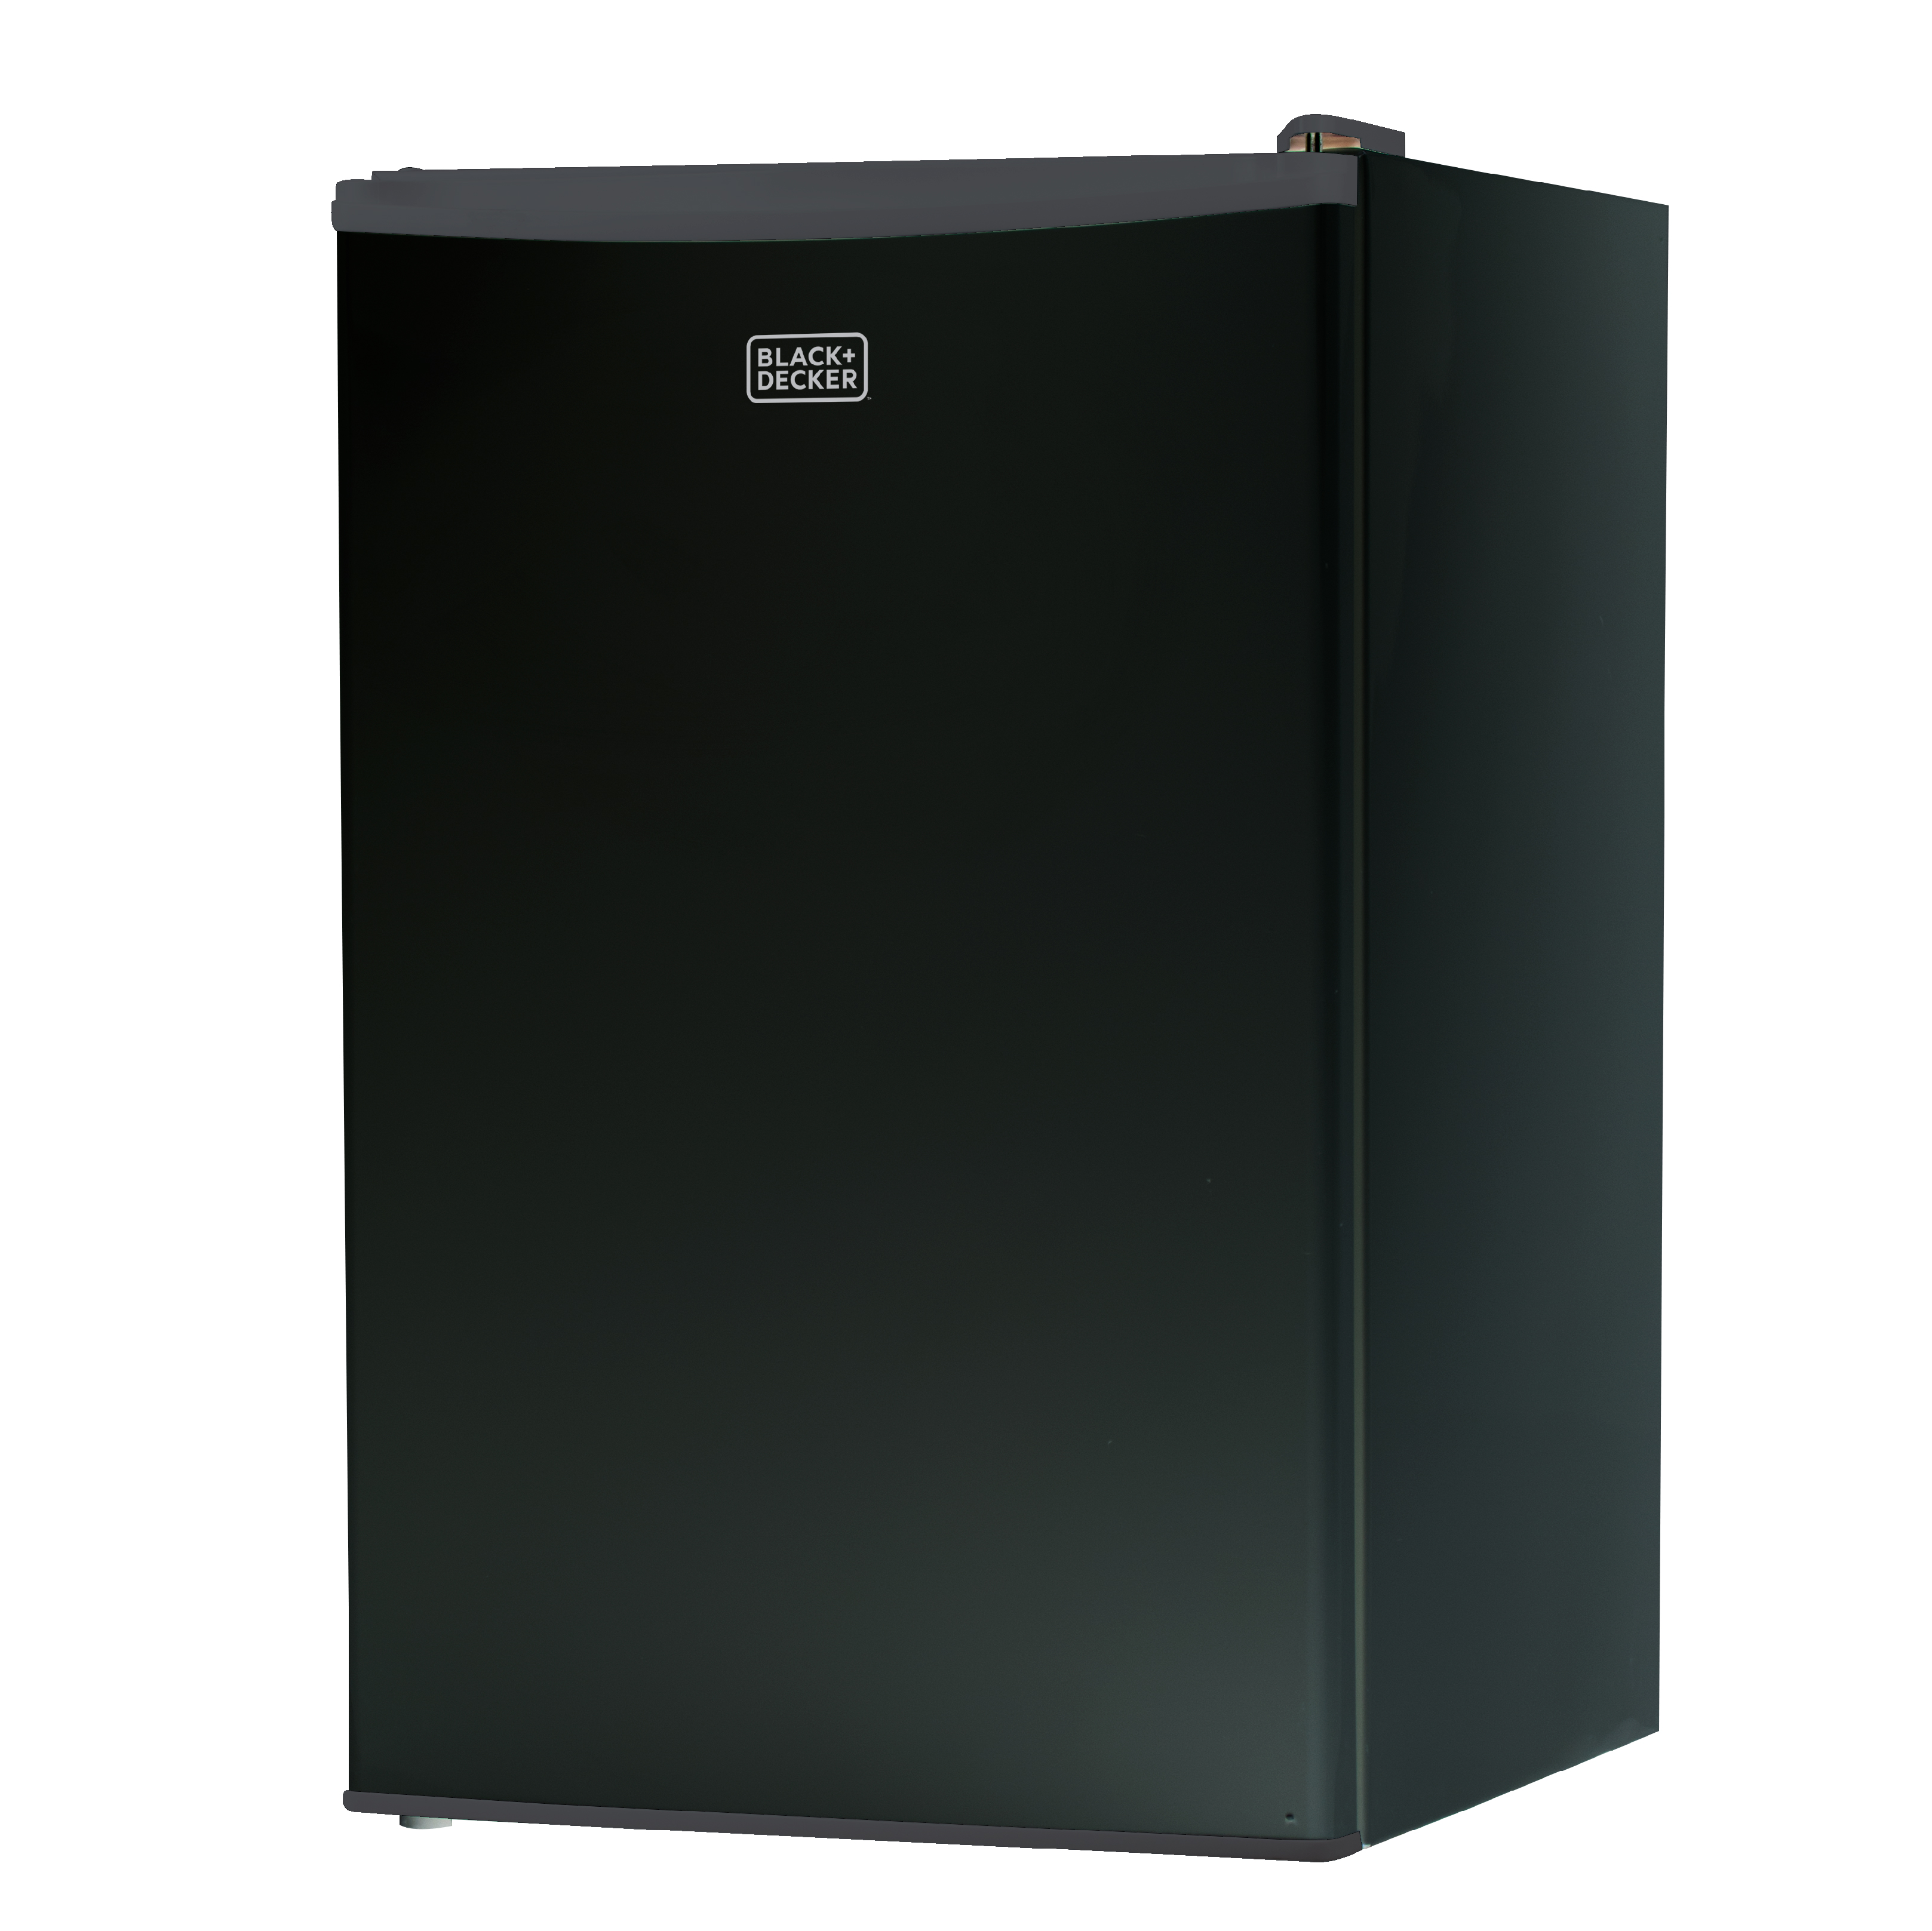 BLACK+DECKER BCRK43B Compact Refrigerator Energy Star Single Door Mini Fridge with Freezer, 4.3 cu. ft., Black - image 1 of 7